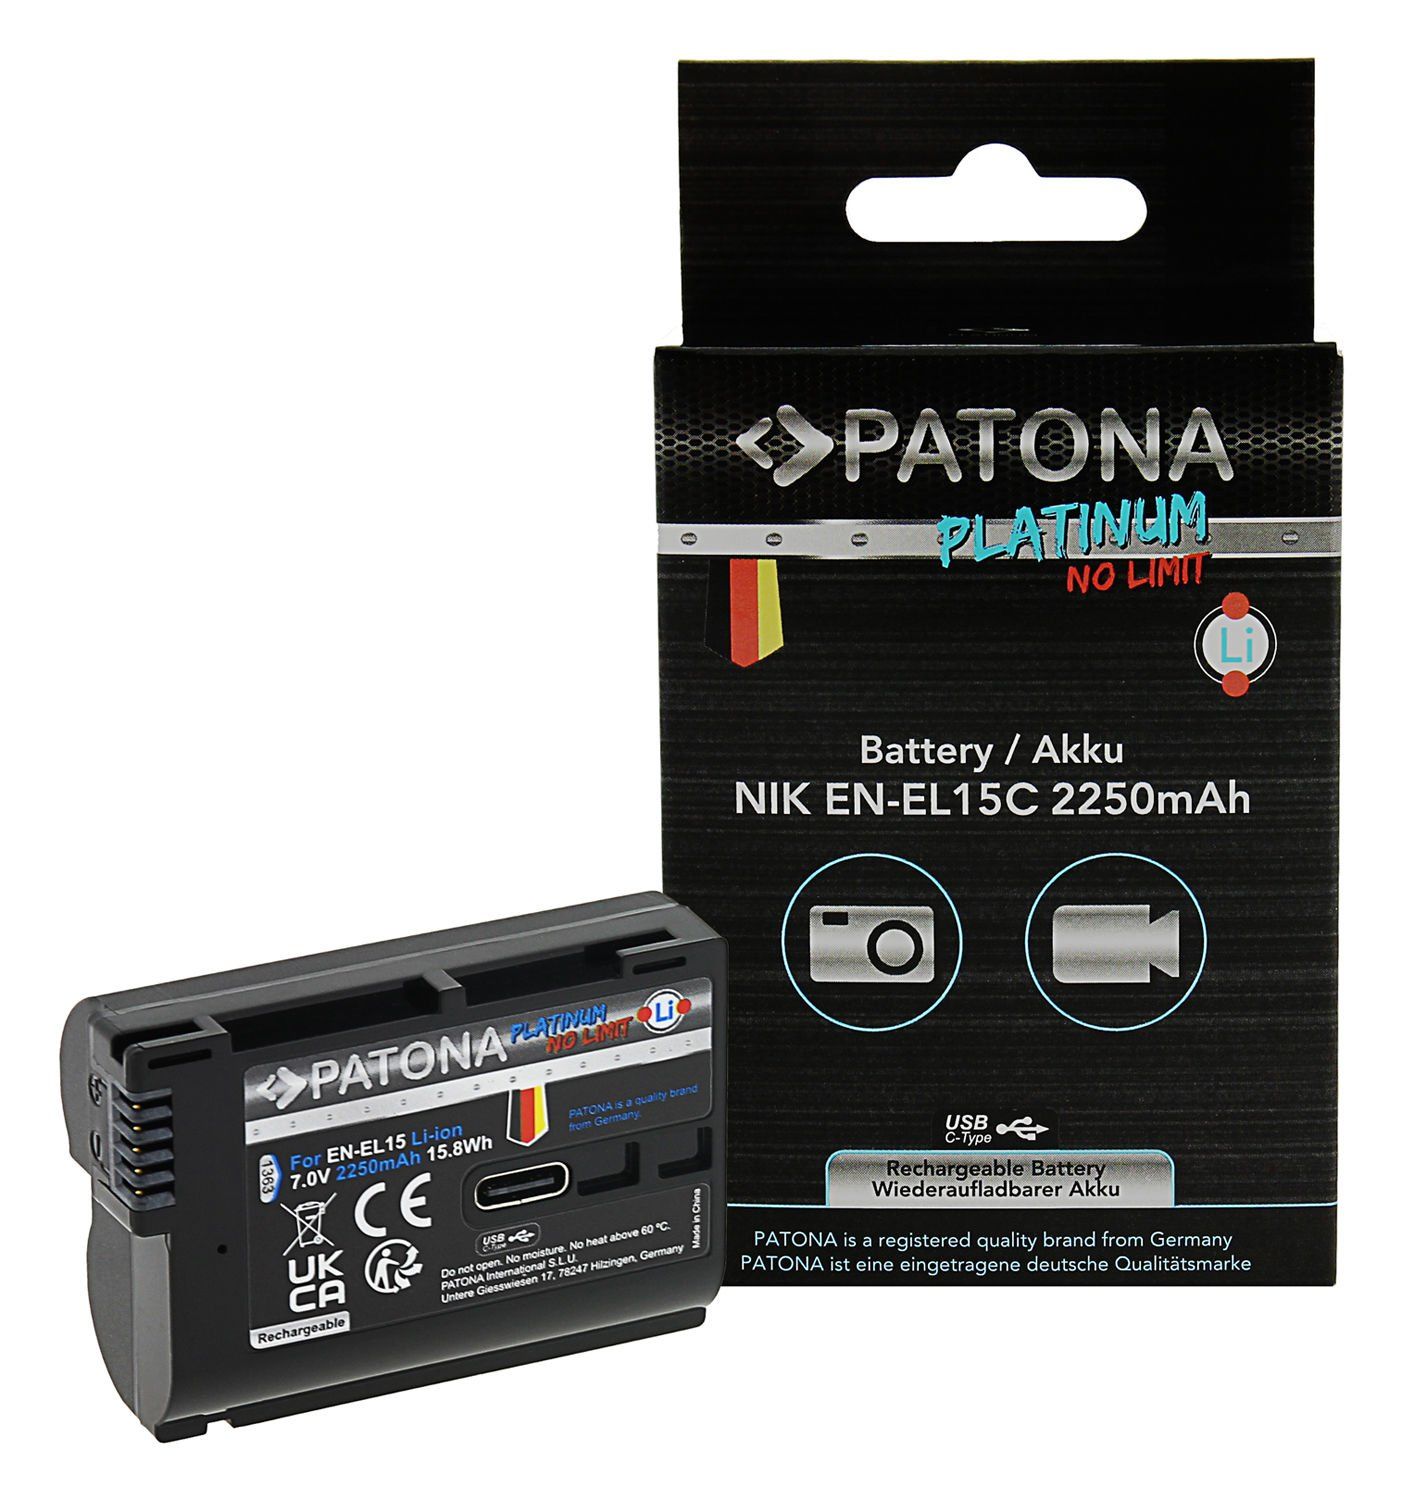 Patona 1363 Platinum Batarya (USB-C Input for Nikon EN-EL15C)